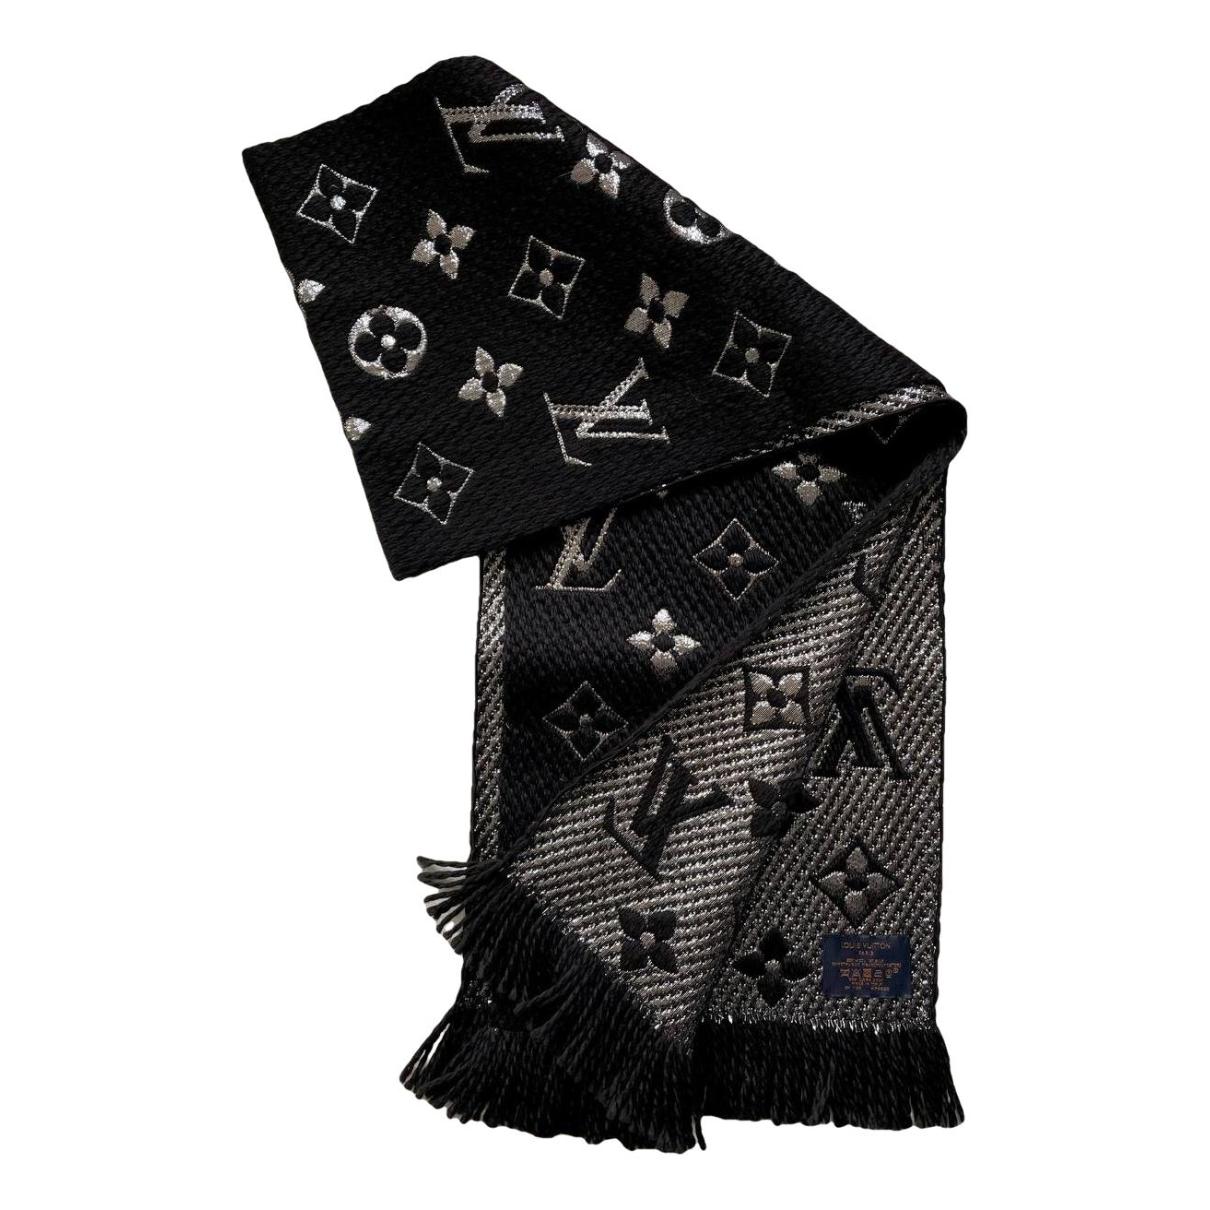 Logomania wool scarf Louis Vuitton Pink in Wool - 31428303